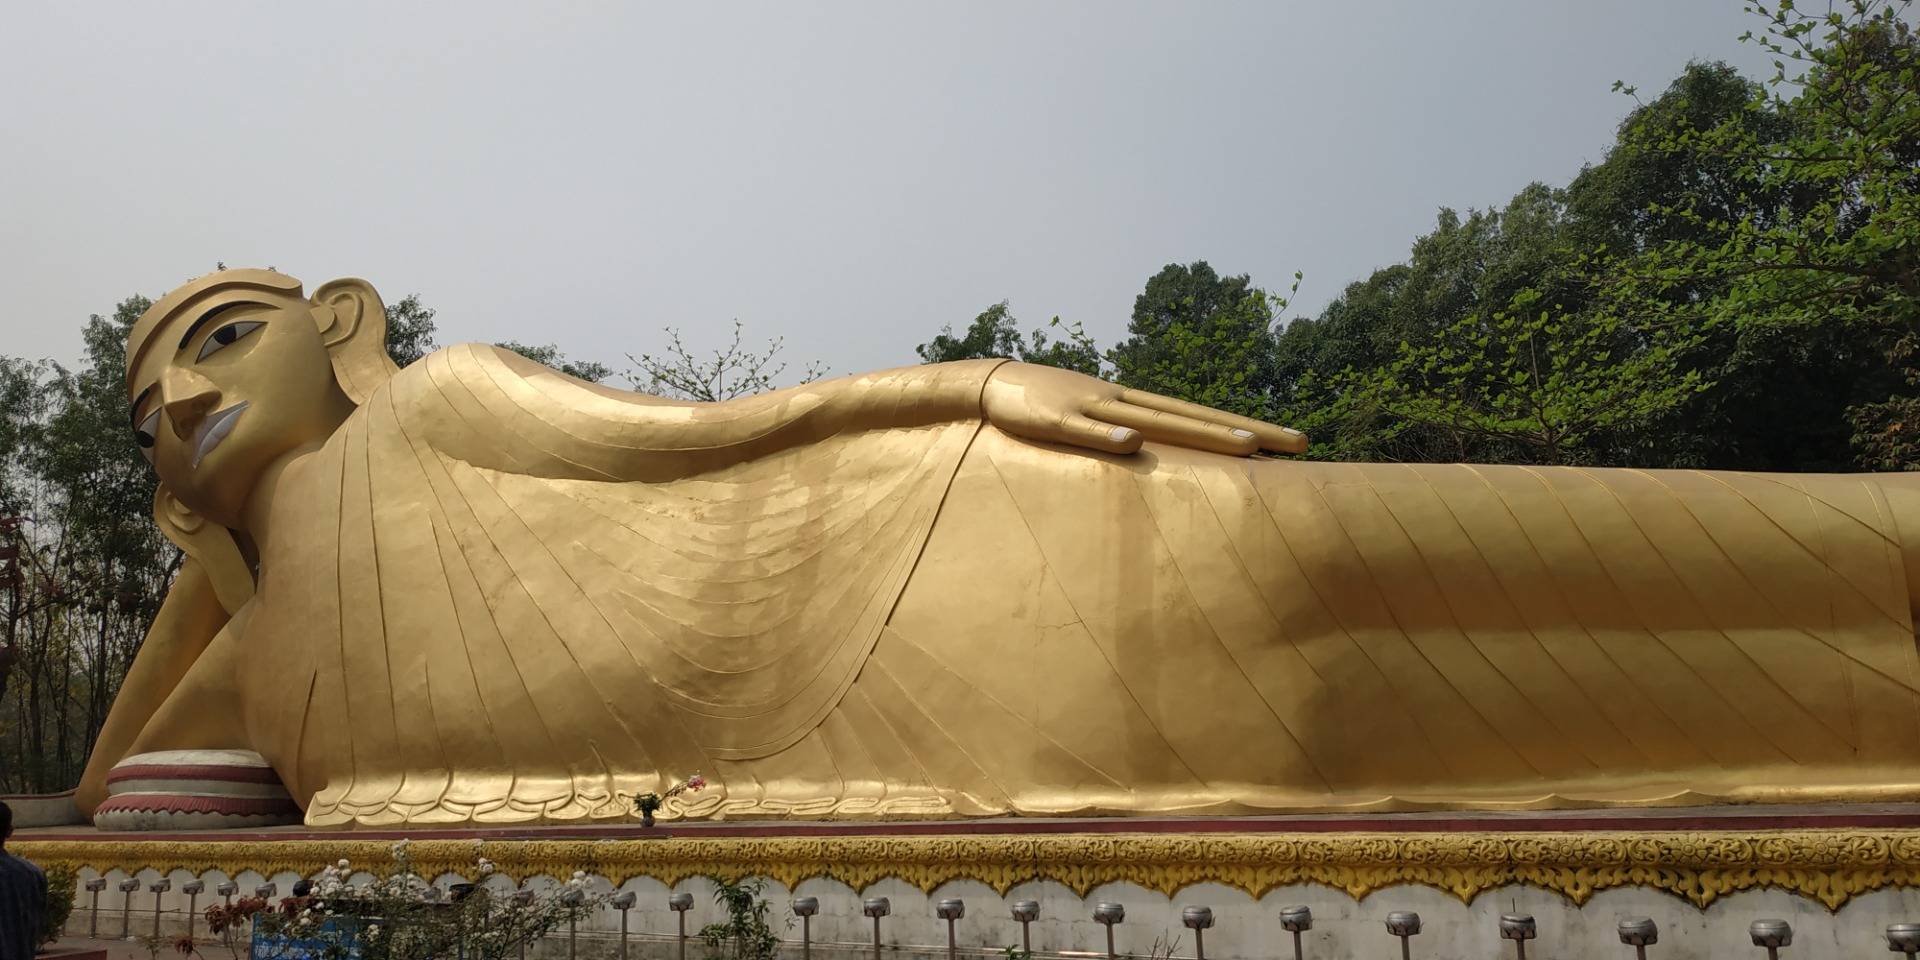  100 Feet Lying Statue of Gutama Buddha - Travelfeed.